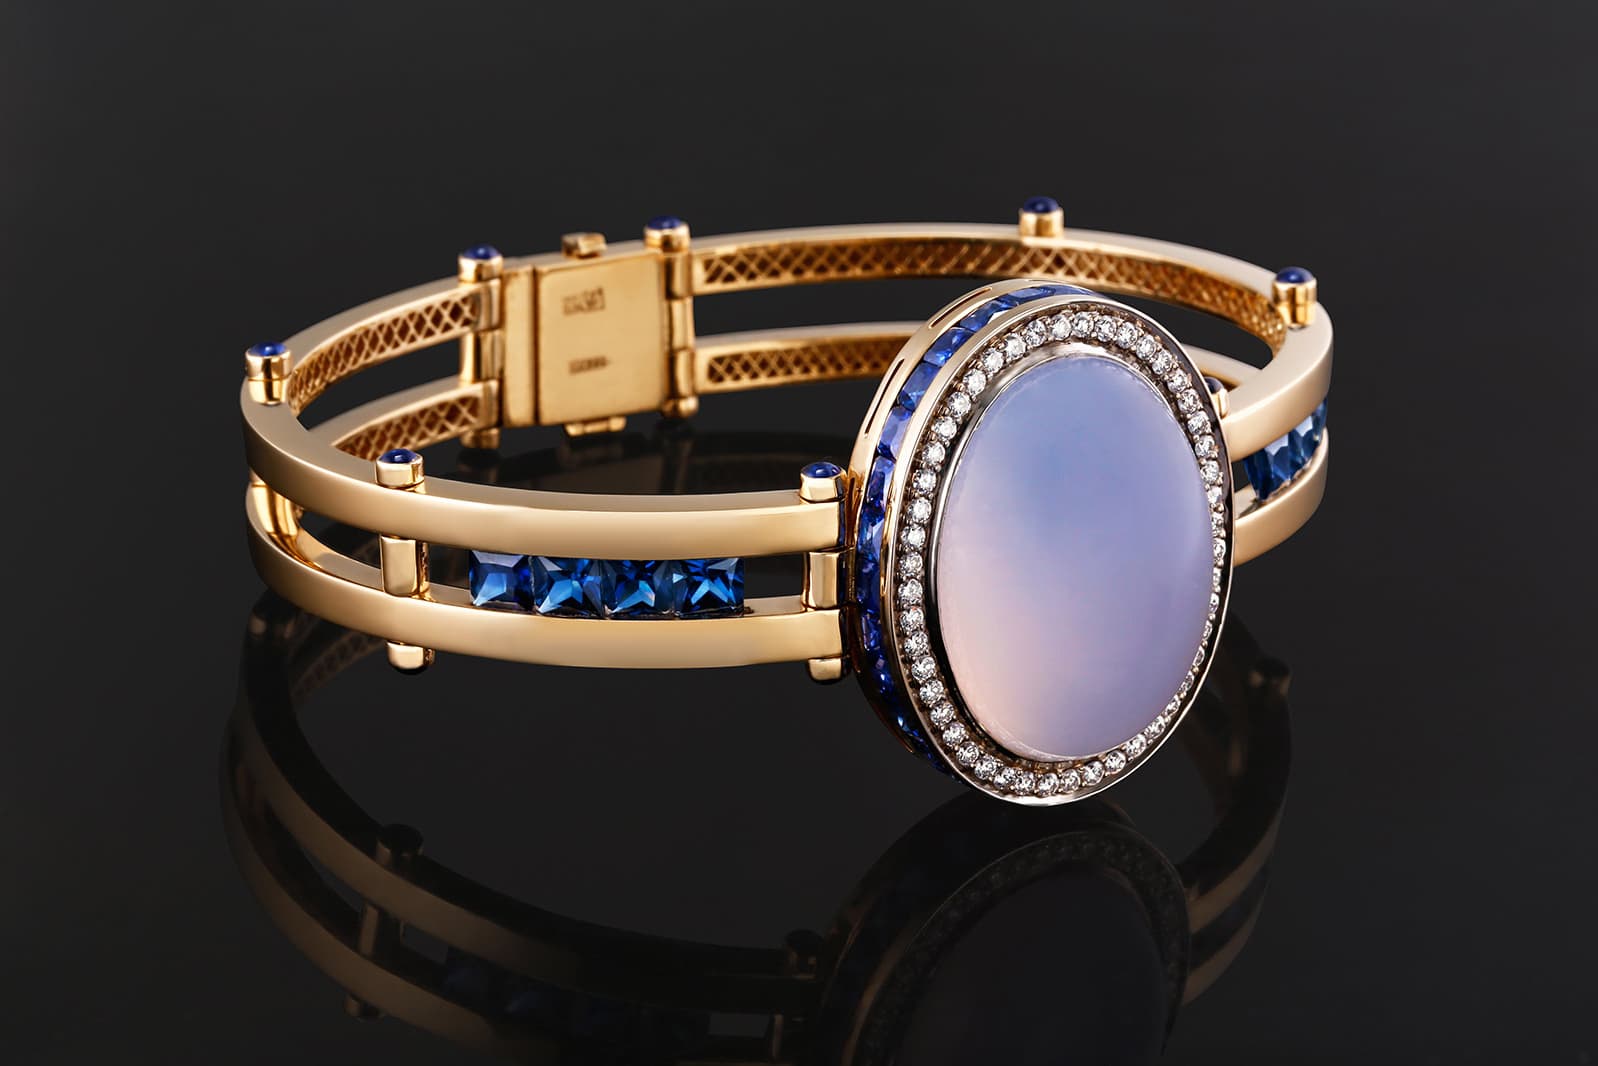 MiLiO bracelet with 34.4cts chalcedony, sapphires and diamonds